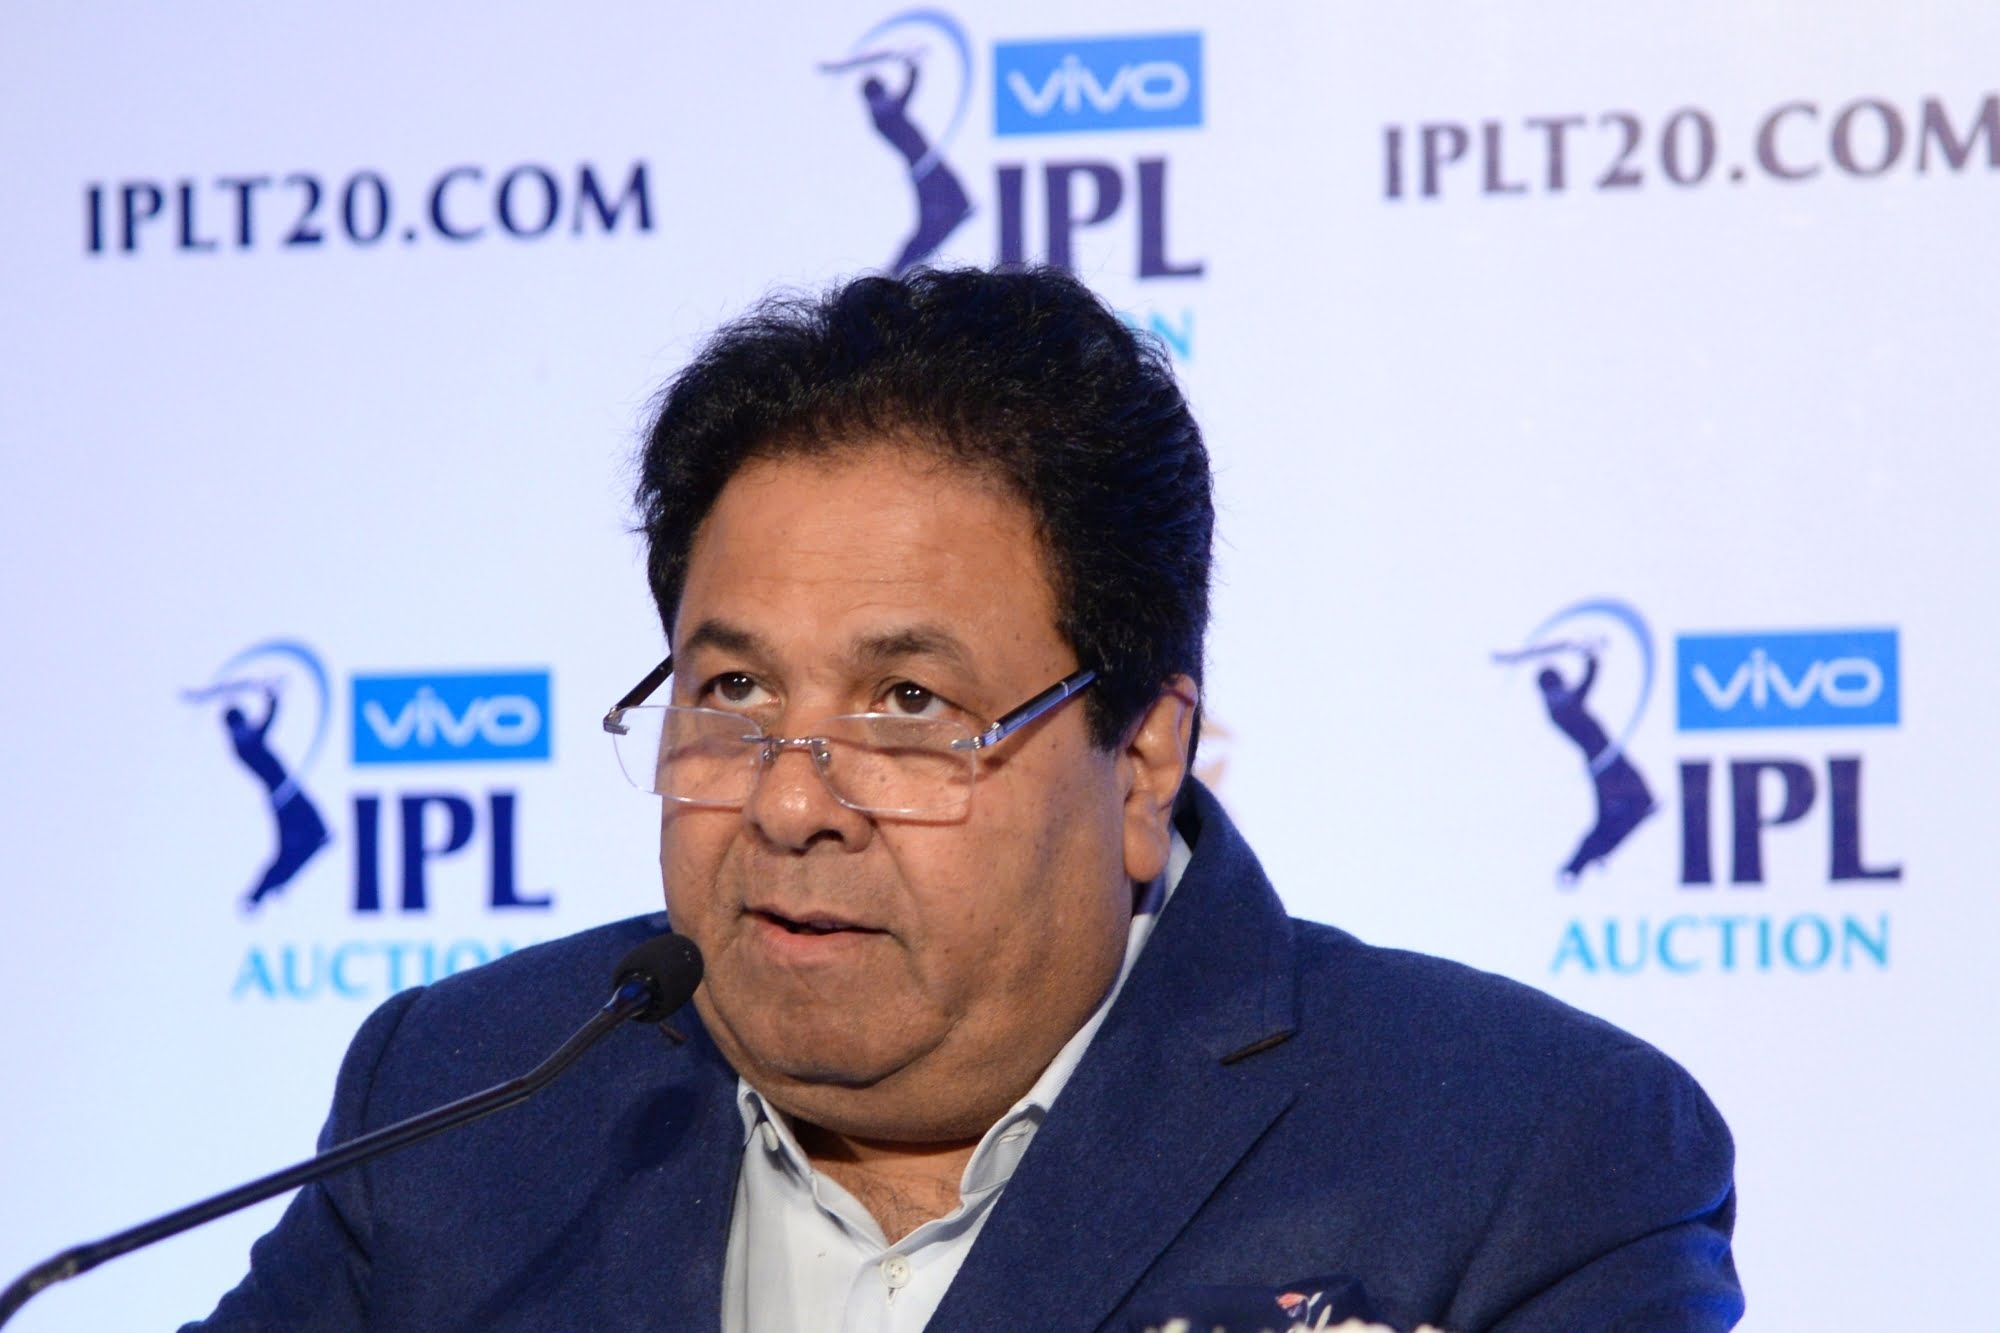 IPL chairman Rajeev Shukla